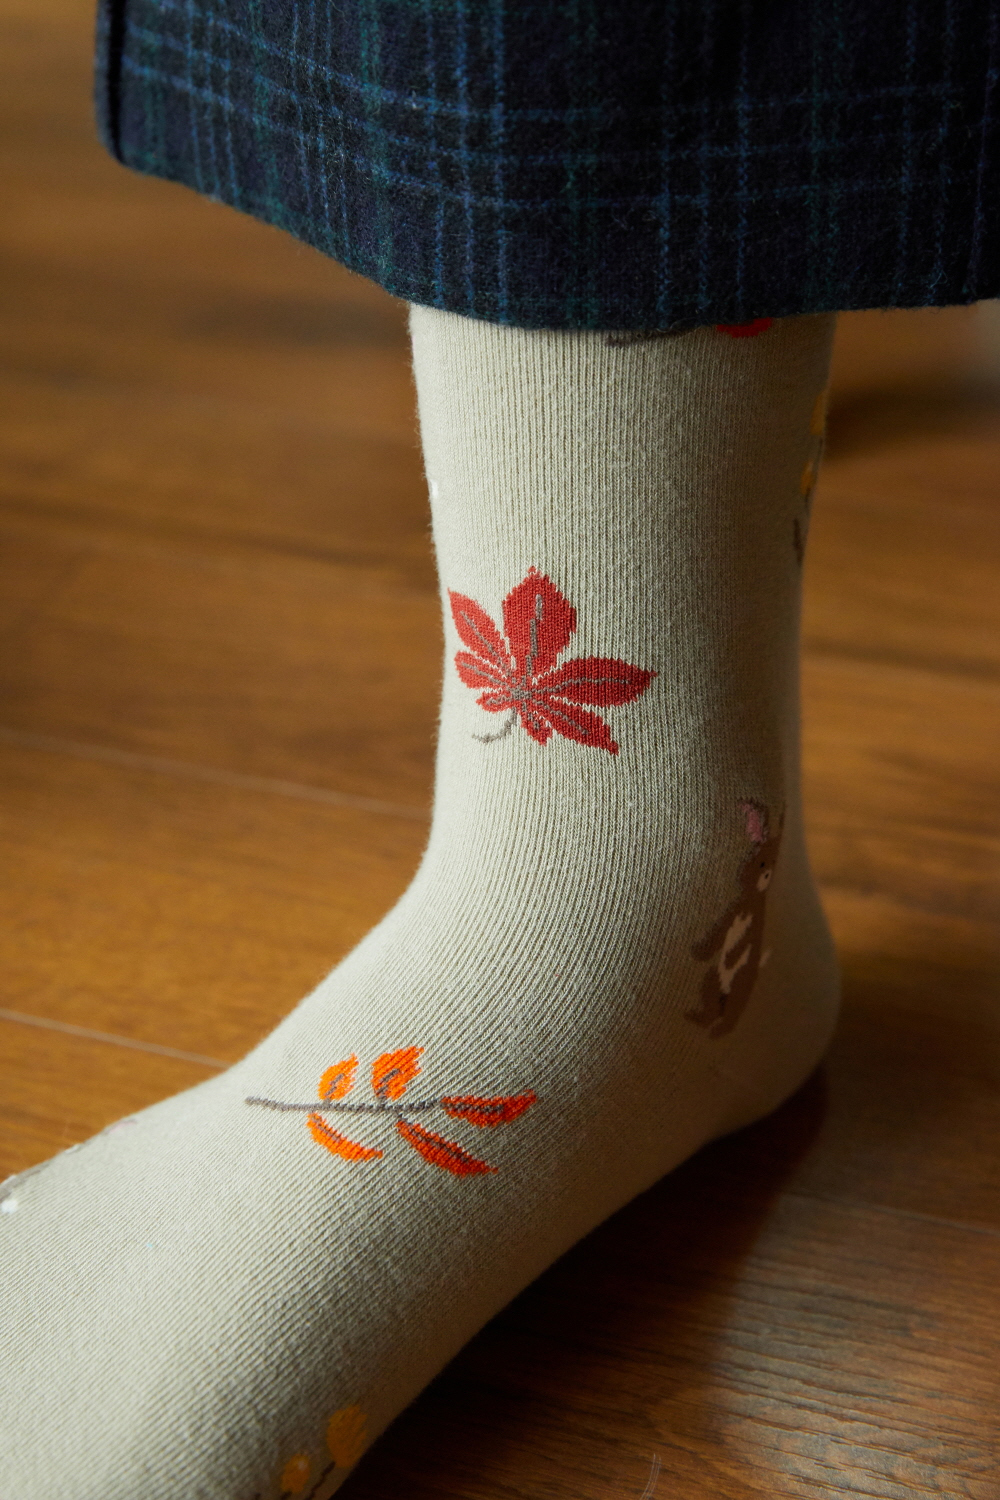 socks product image-S1L22